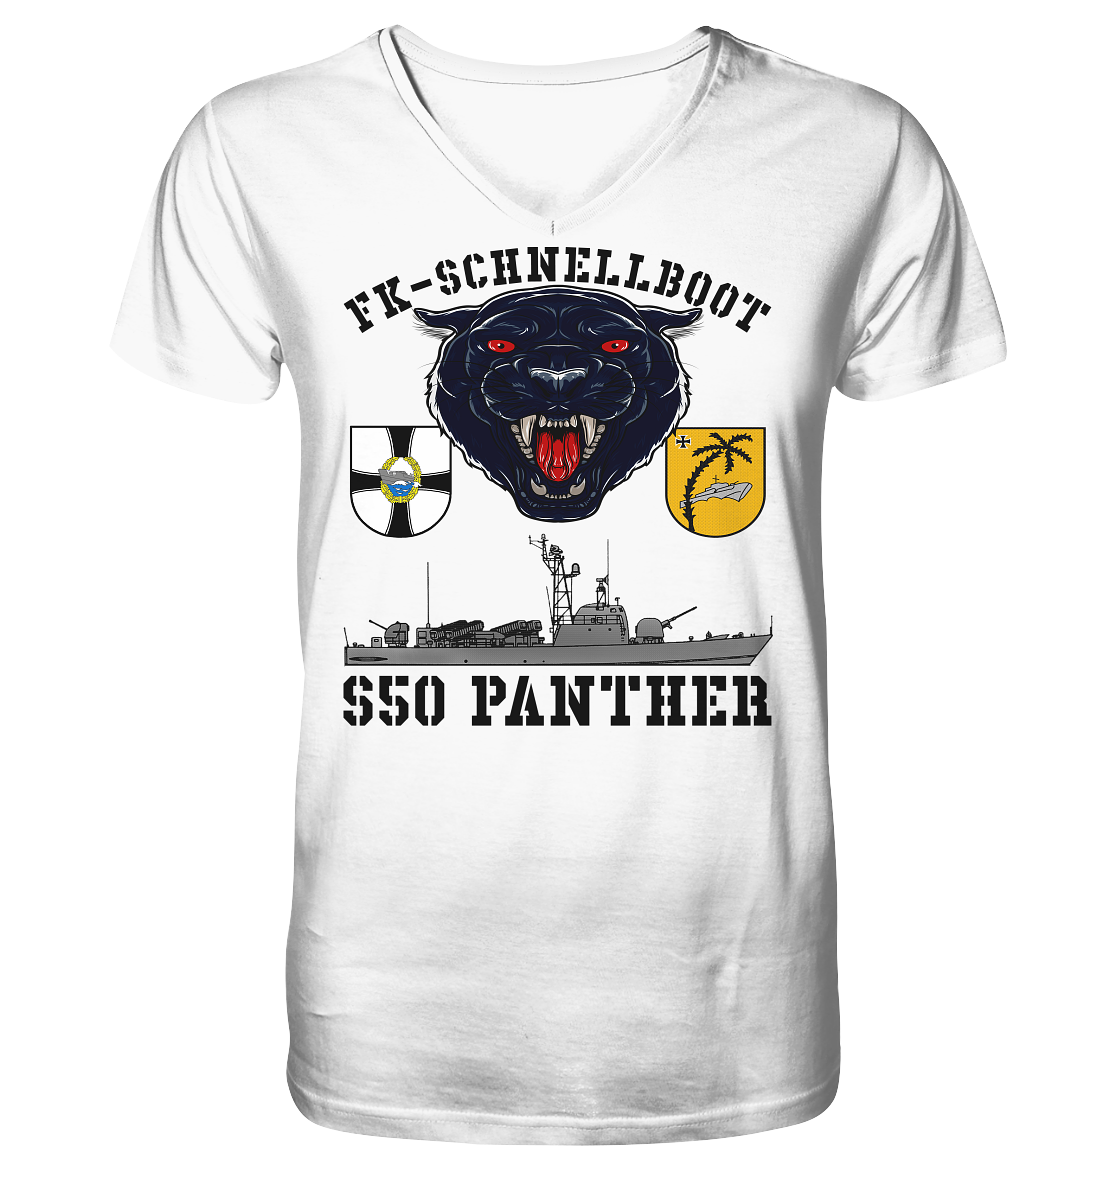 S50 PANTHER - Mens Organic V-Neck Shirt